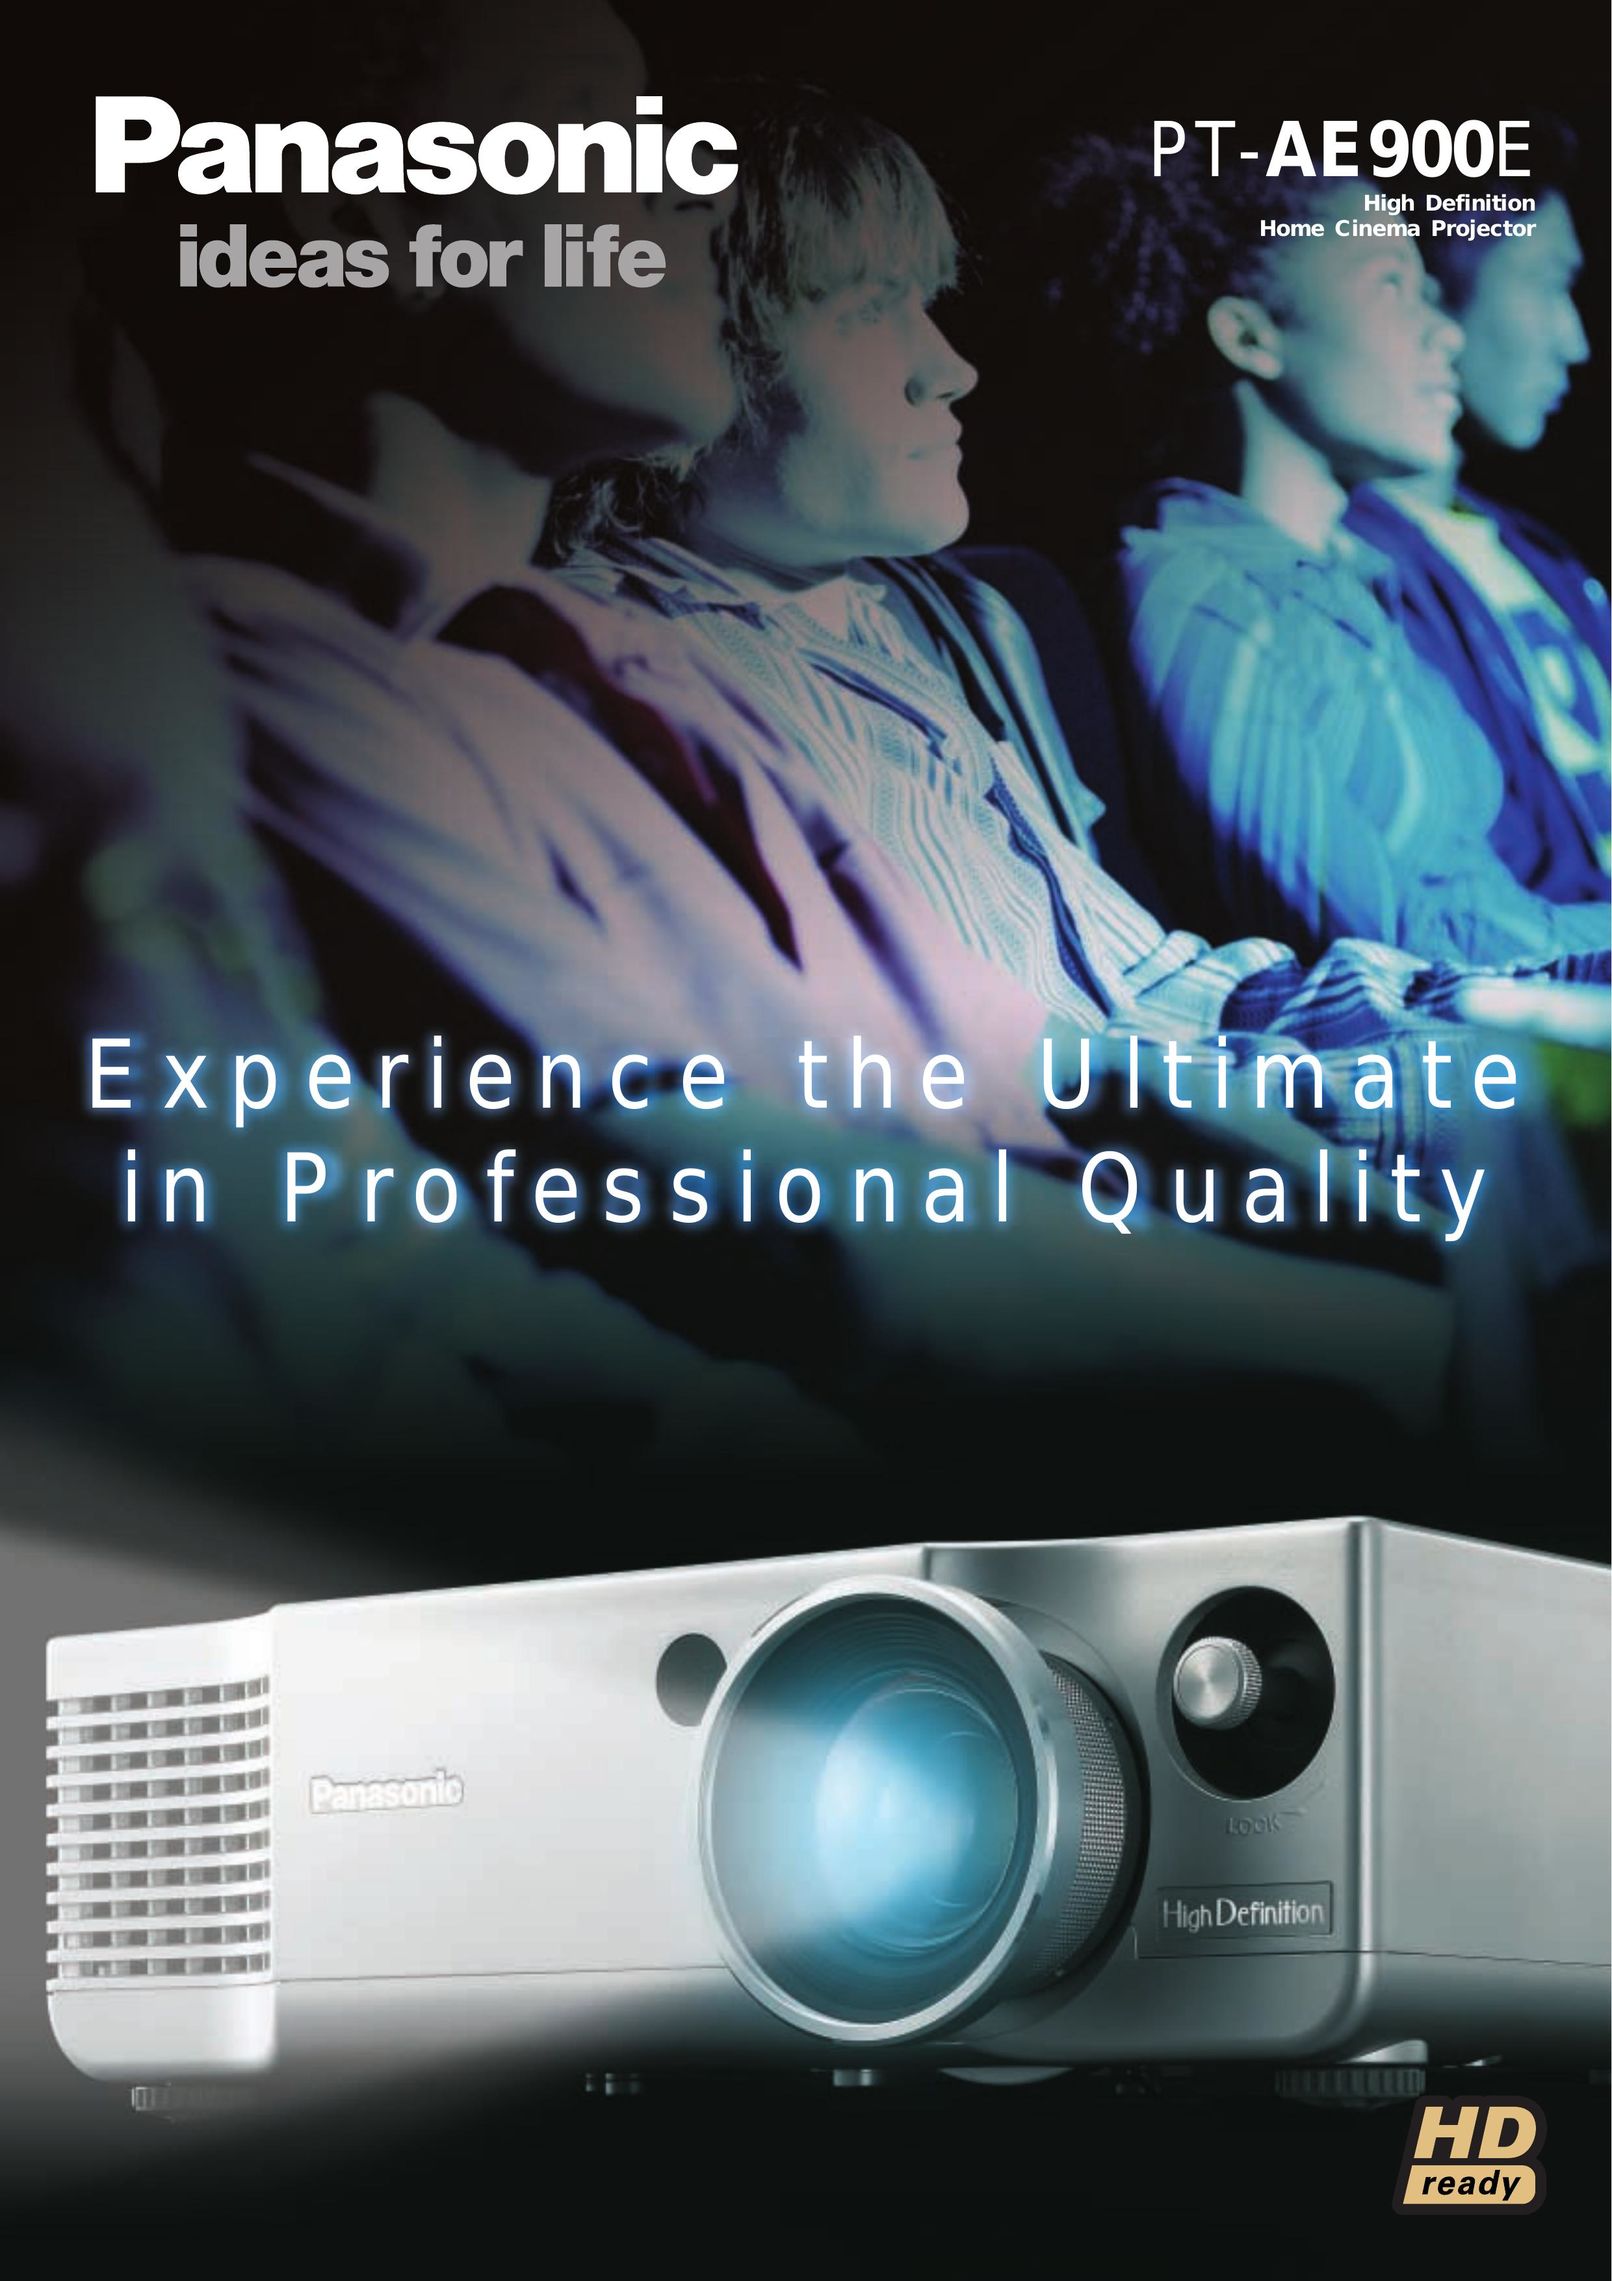 Panasonic pt-ae900e Home Theater System User Manual